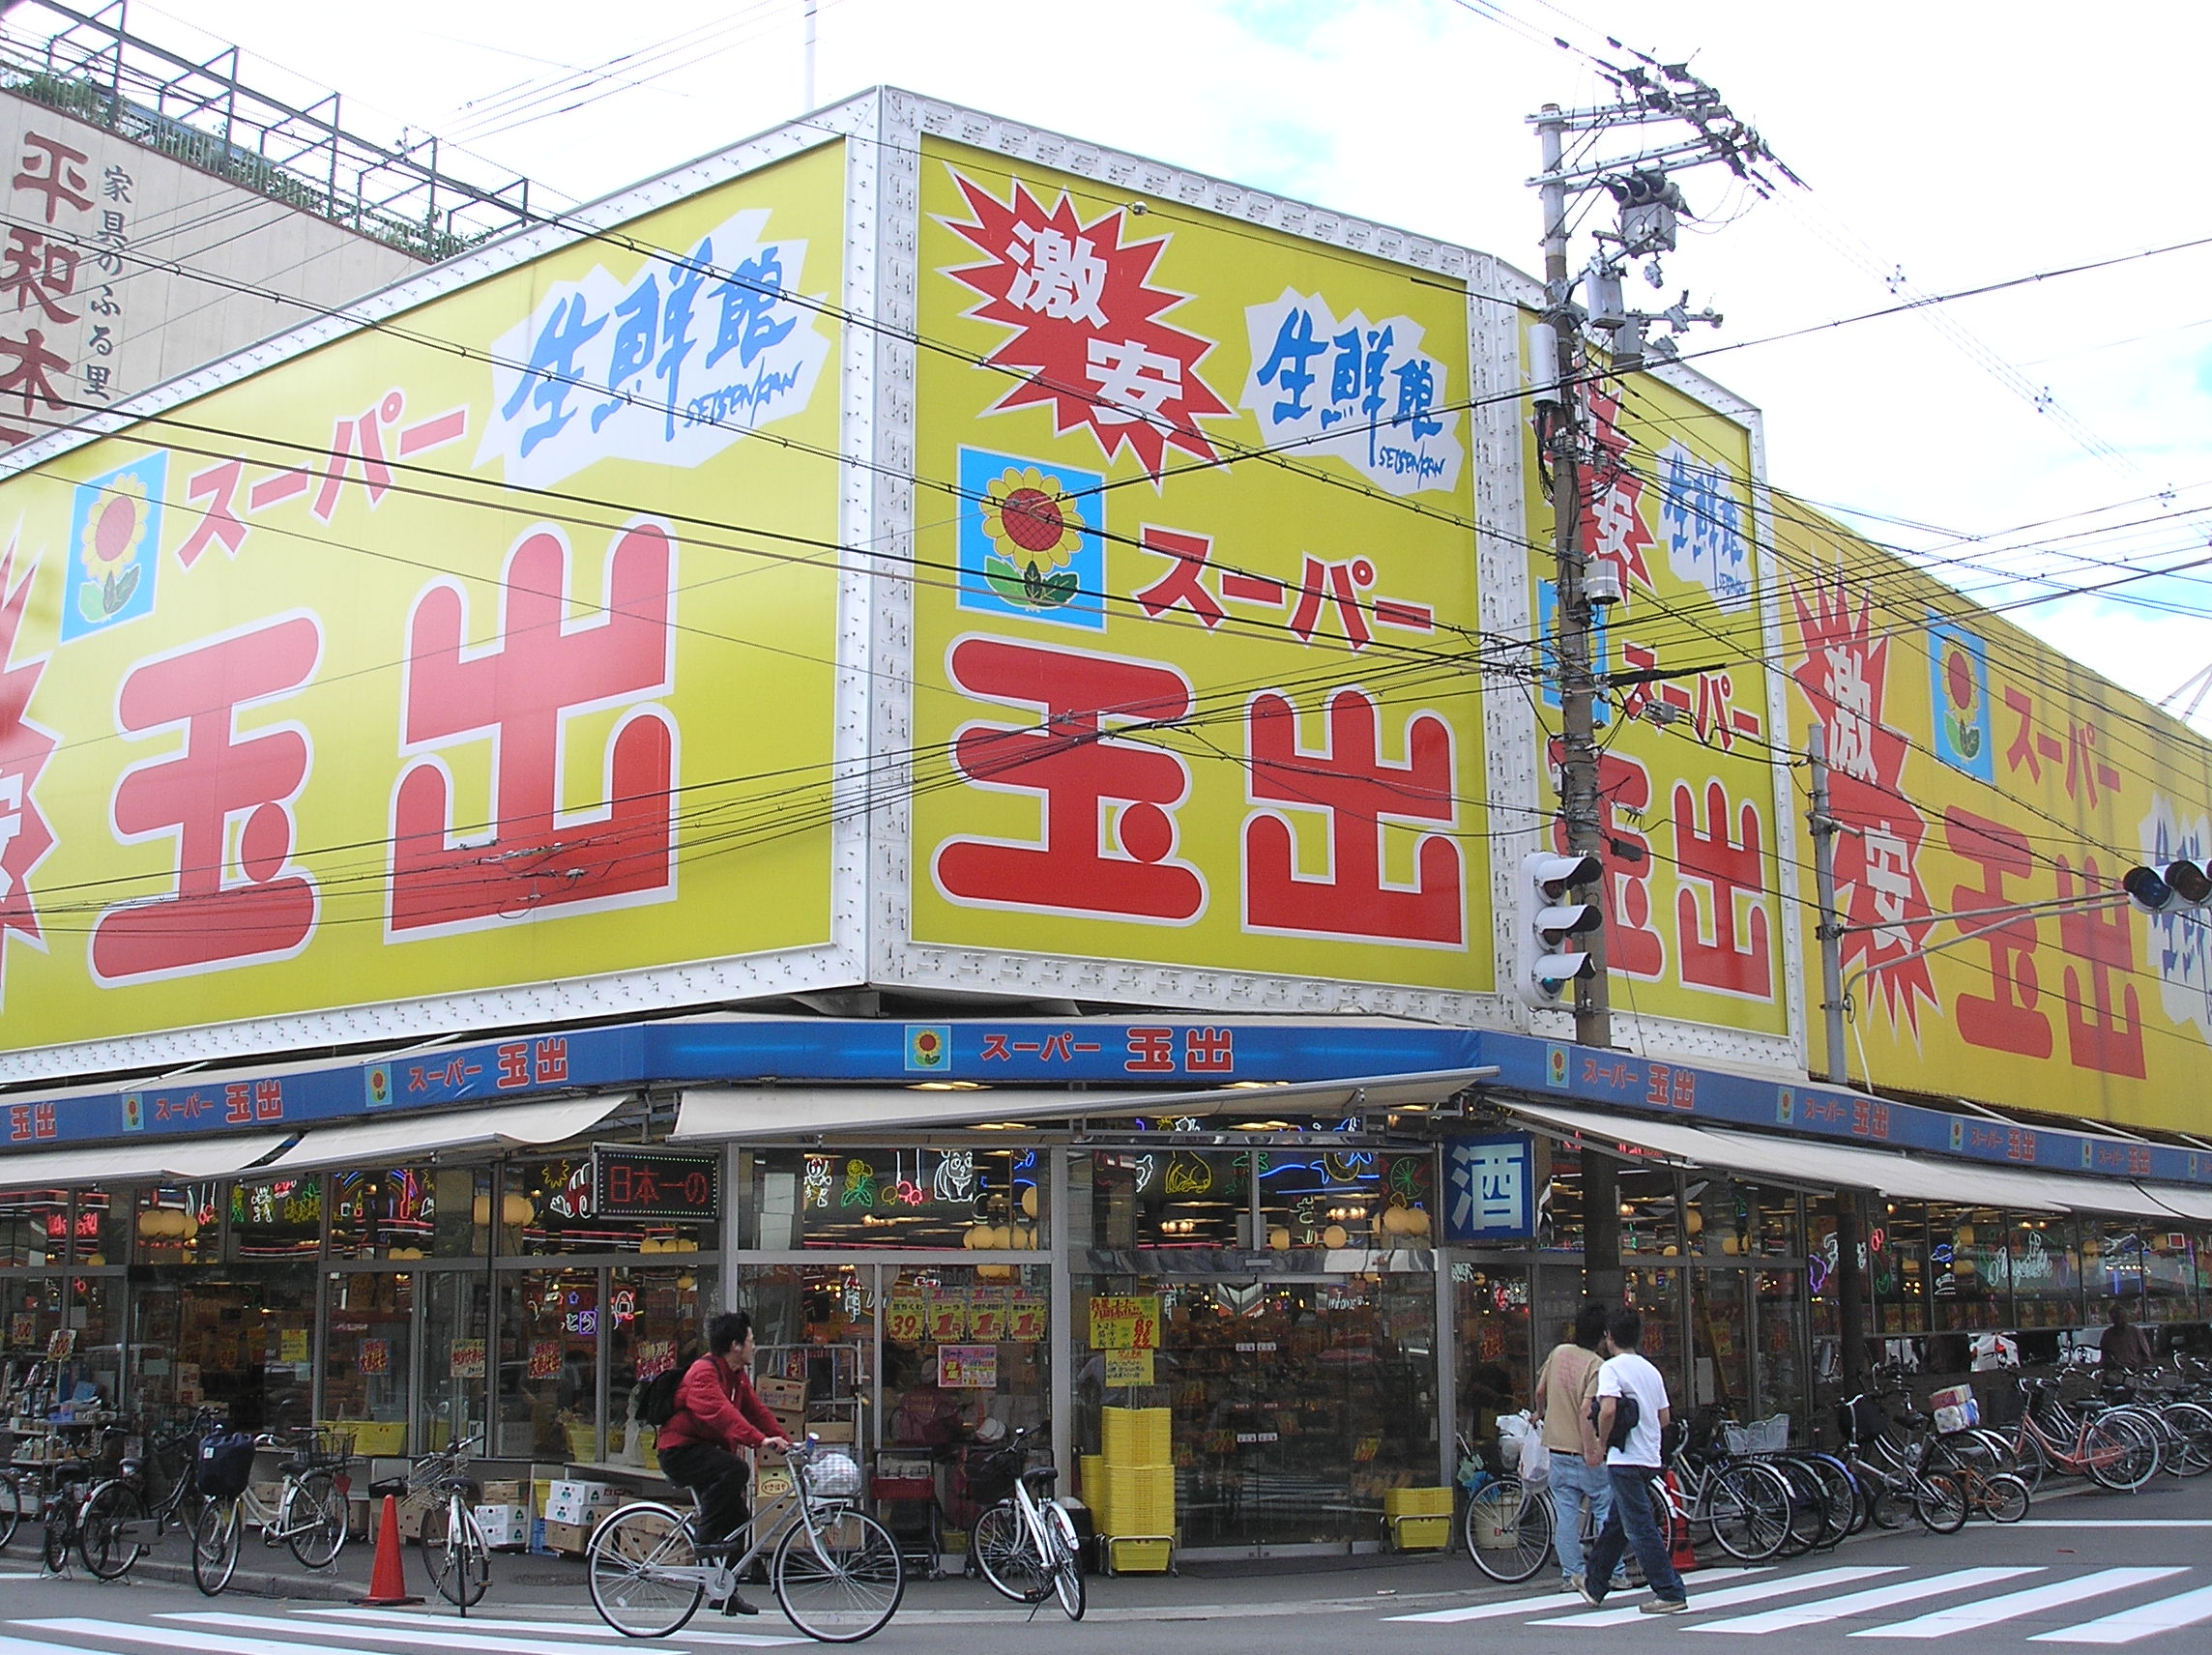 Supermarket. 528m to Super Tamade Horie store (Super)